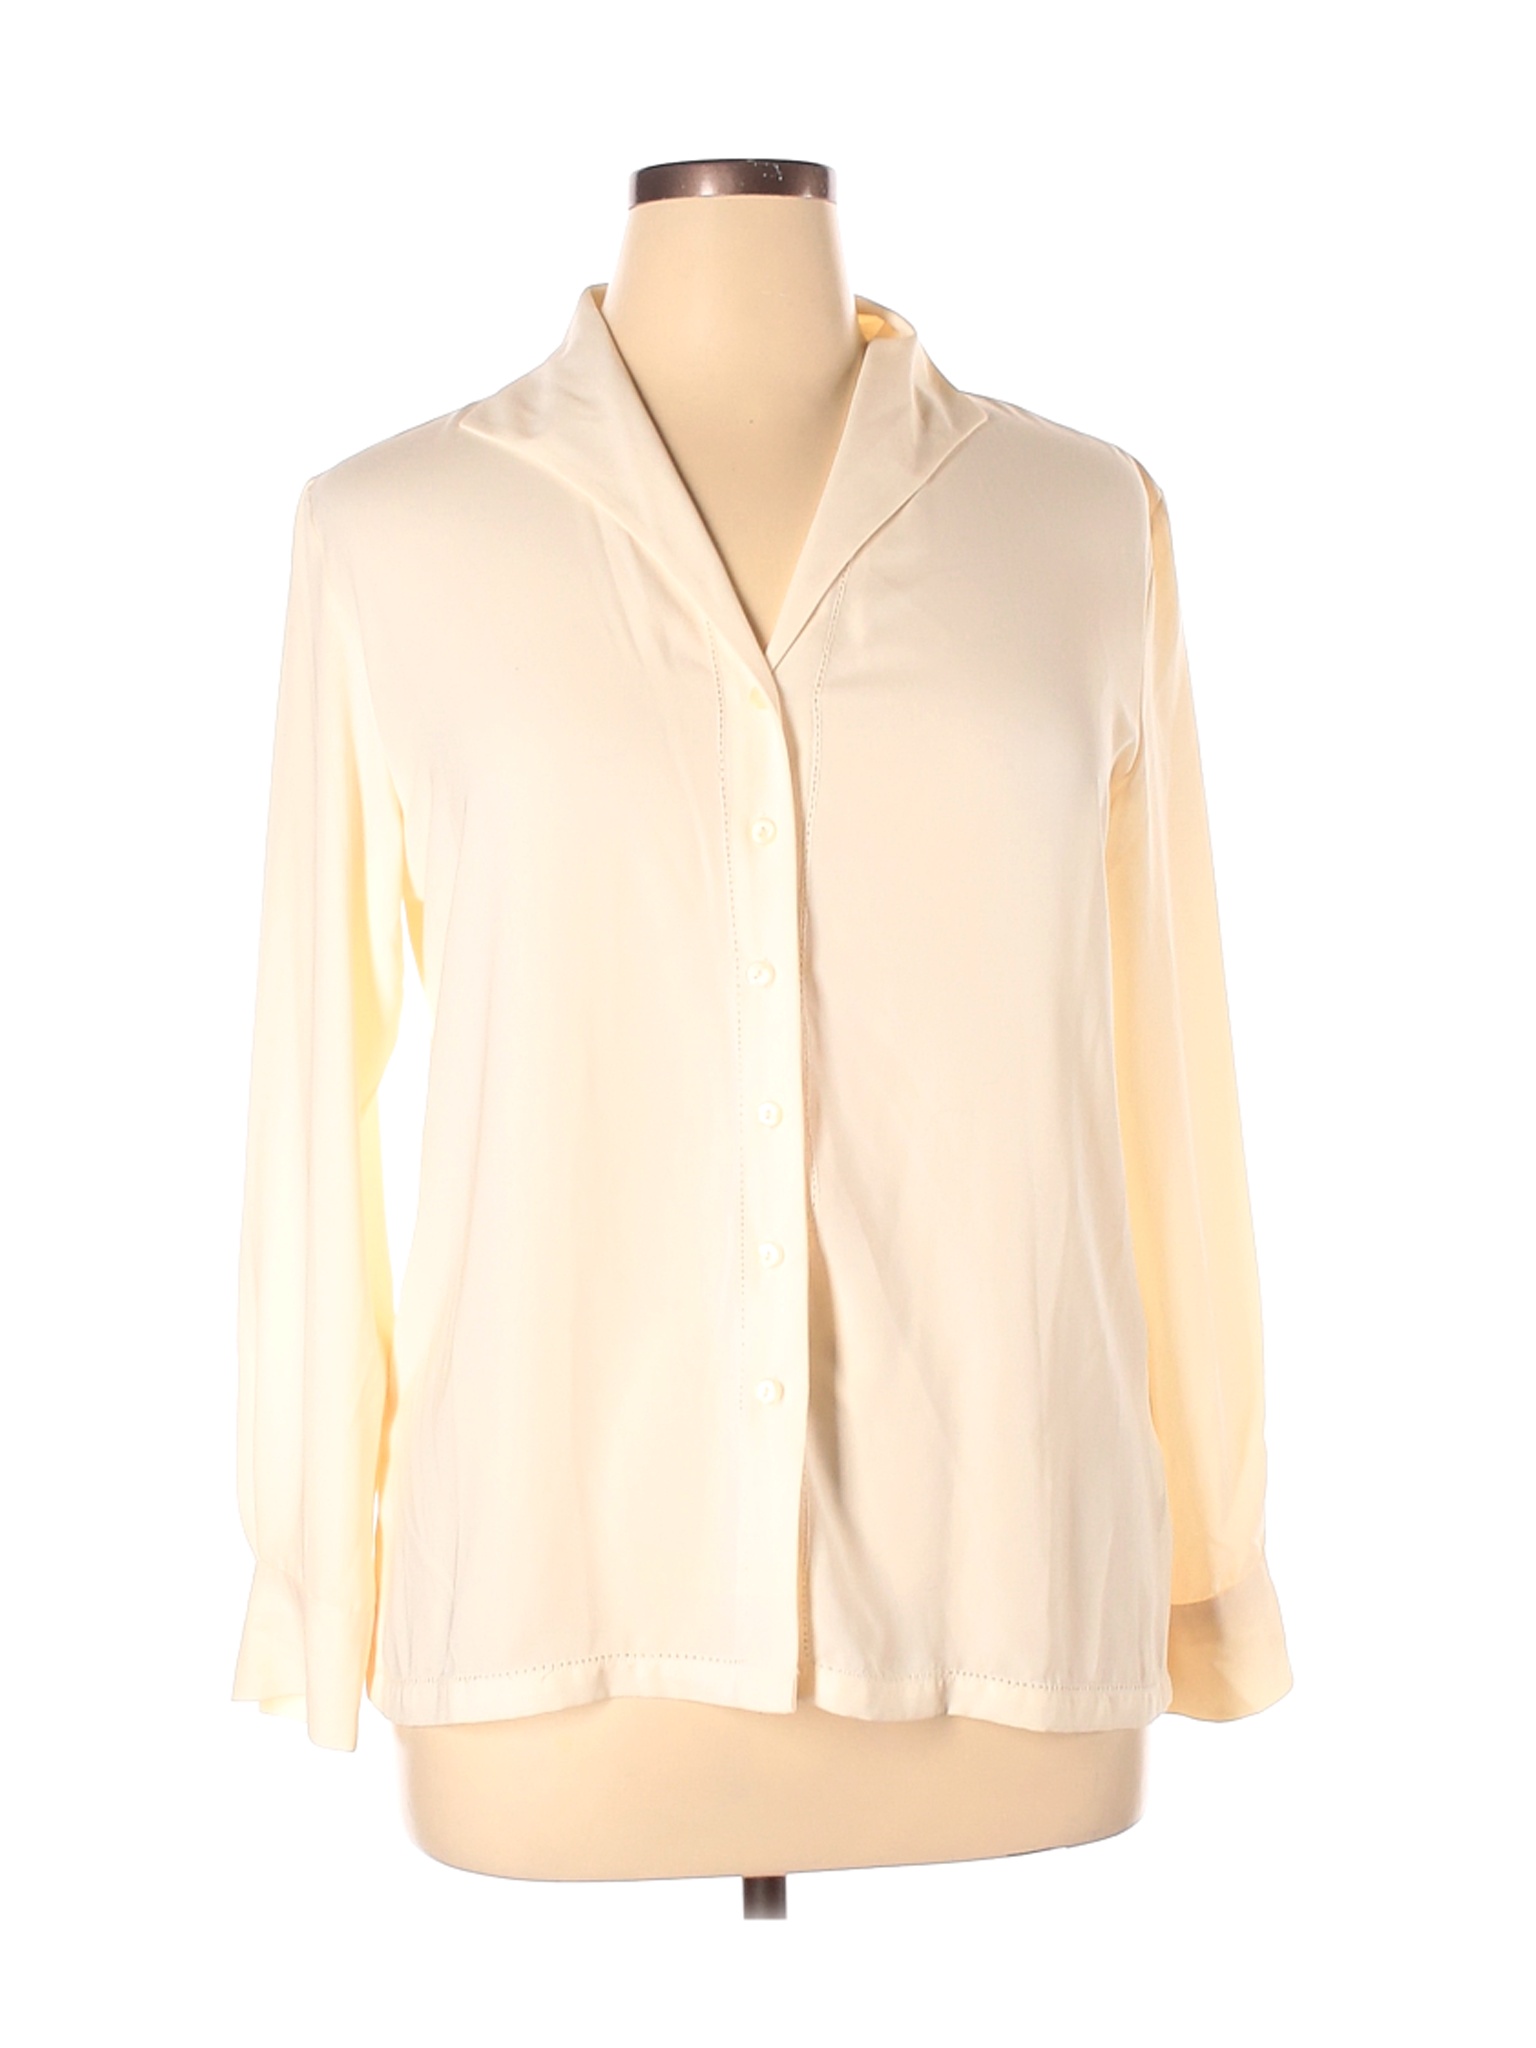 TR Bentley Women Brown Long Sleeve Blouse XL | eBay